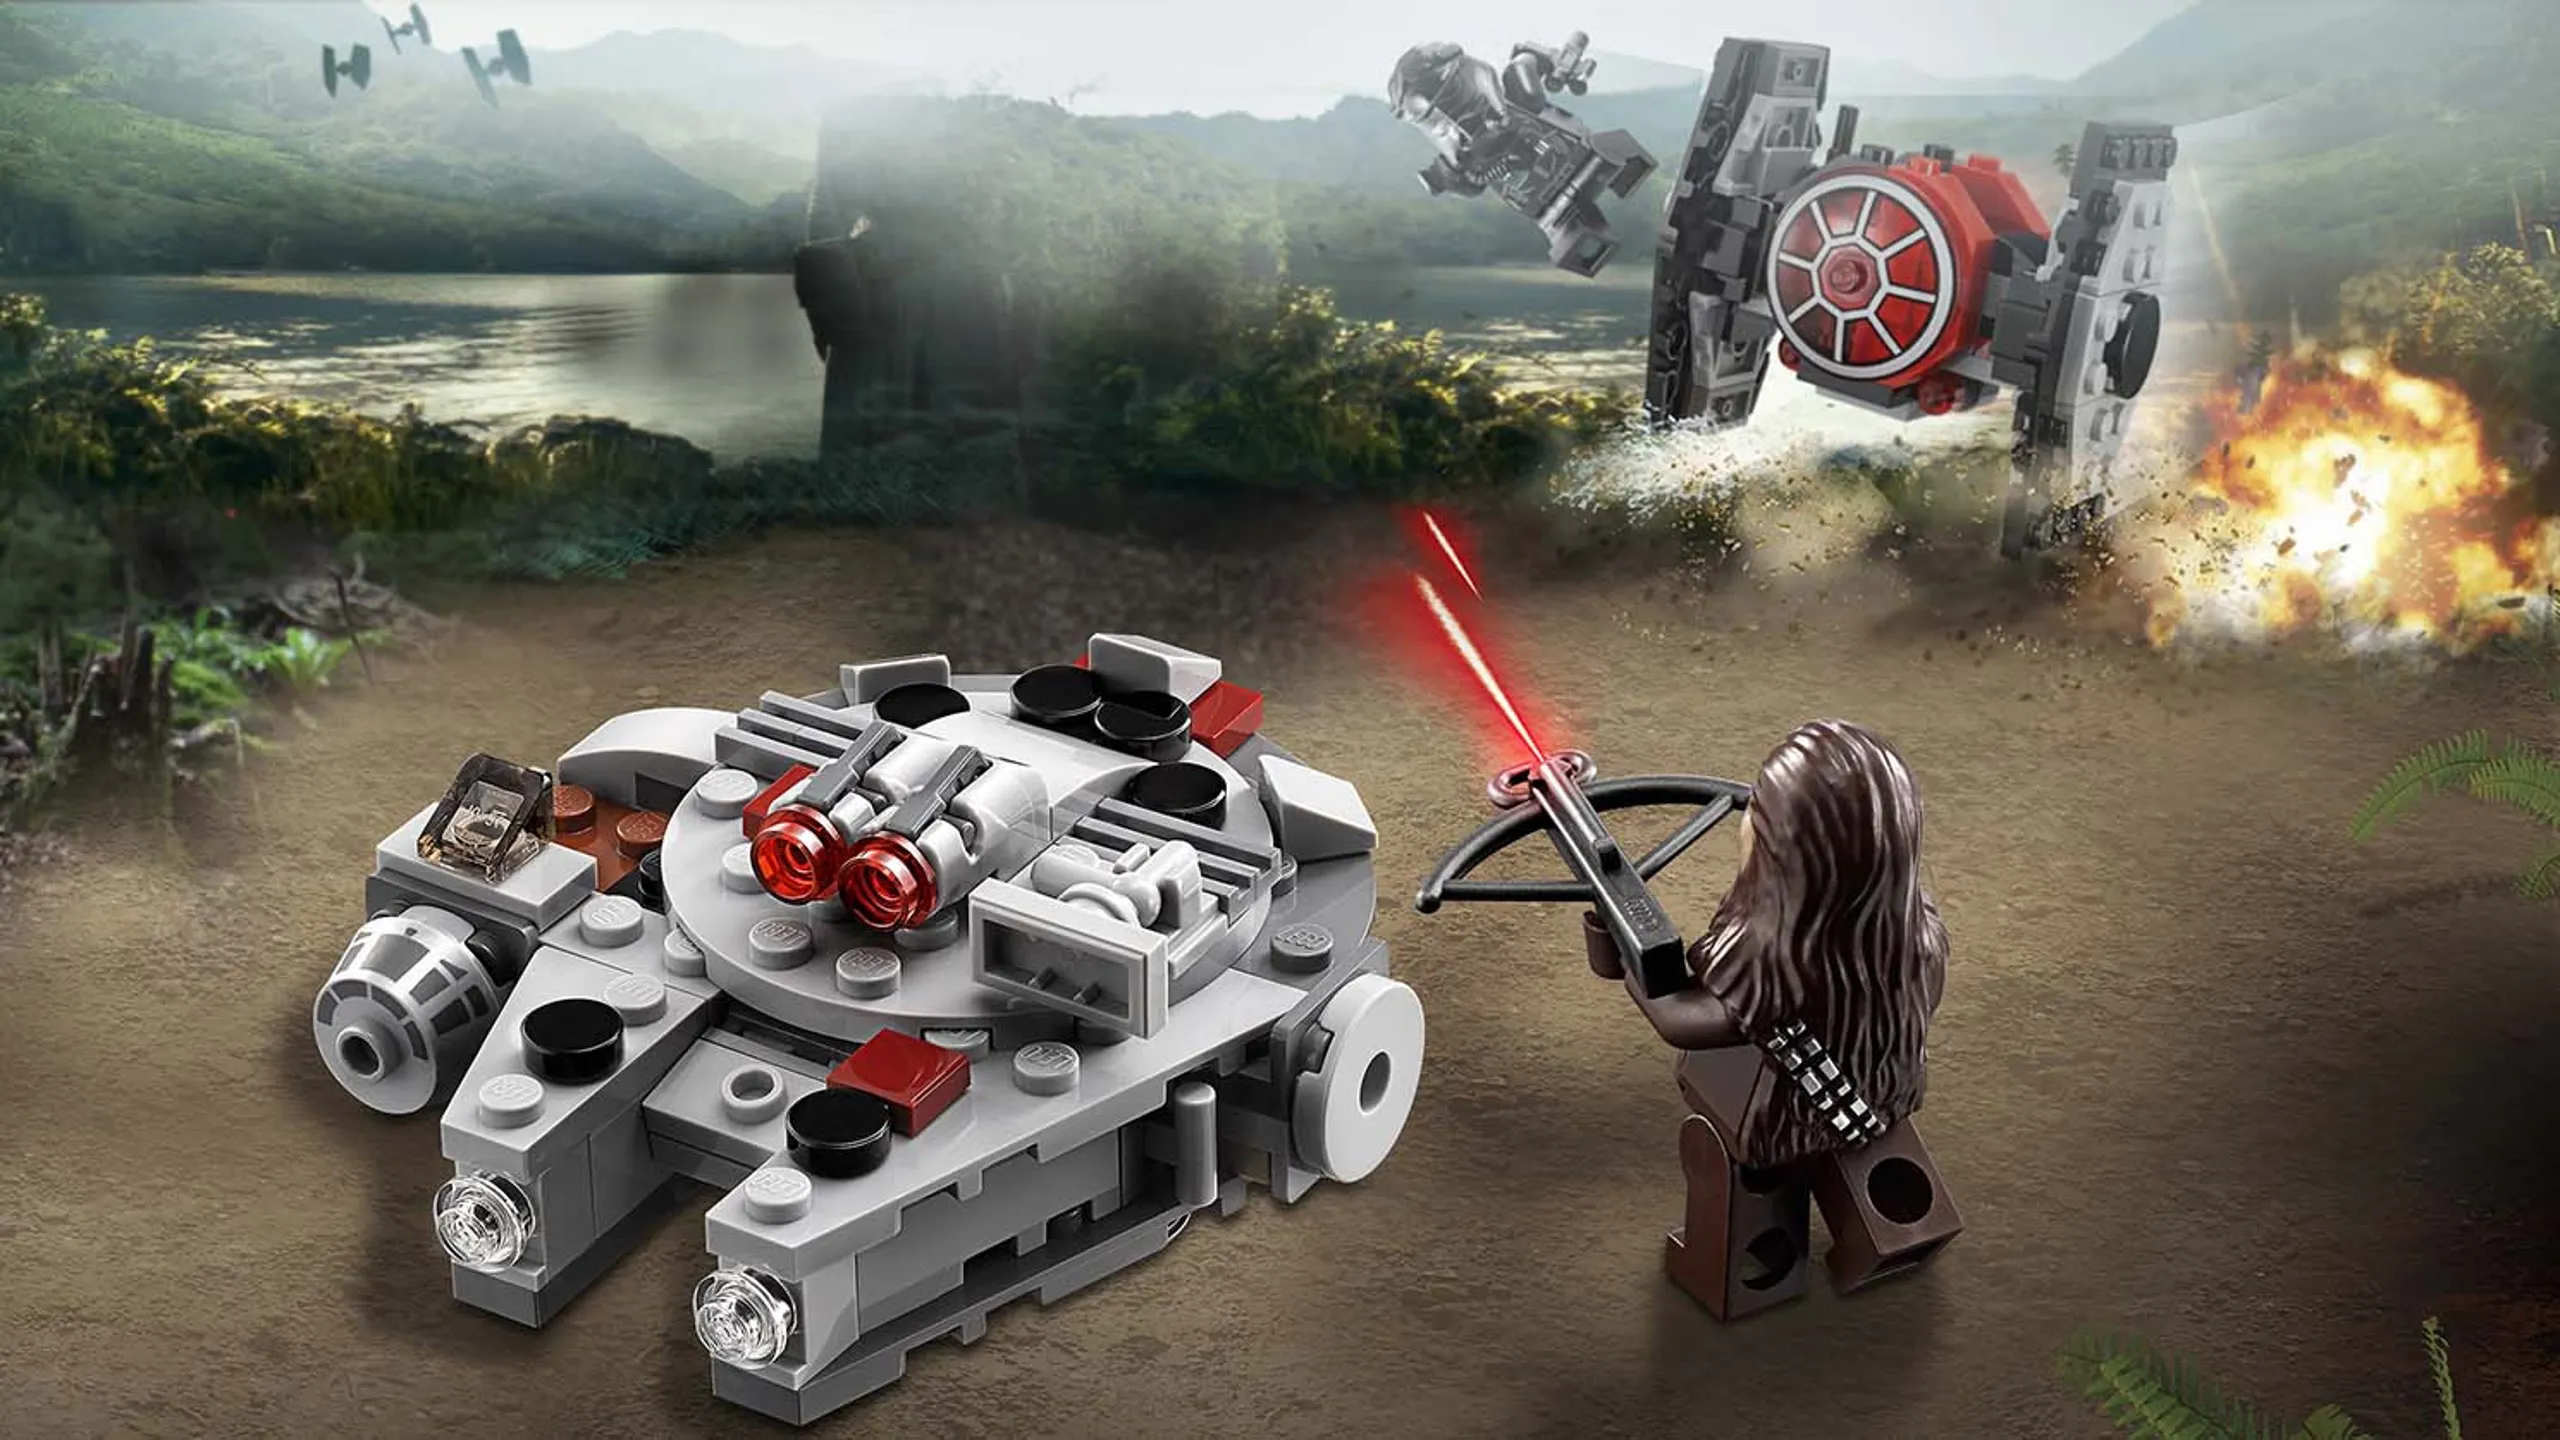 LEGO Star Wars Millennium Falcon™ Microfighter - 75193 - Chewbacca flying in the Millennium Falcon